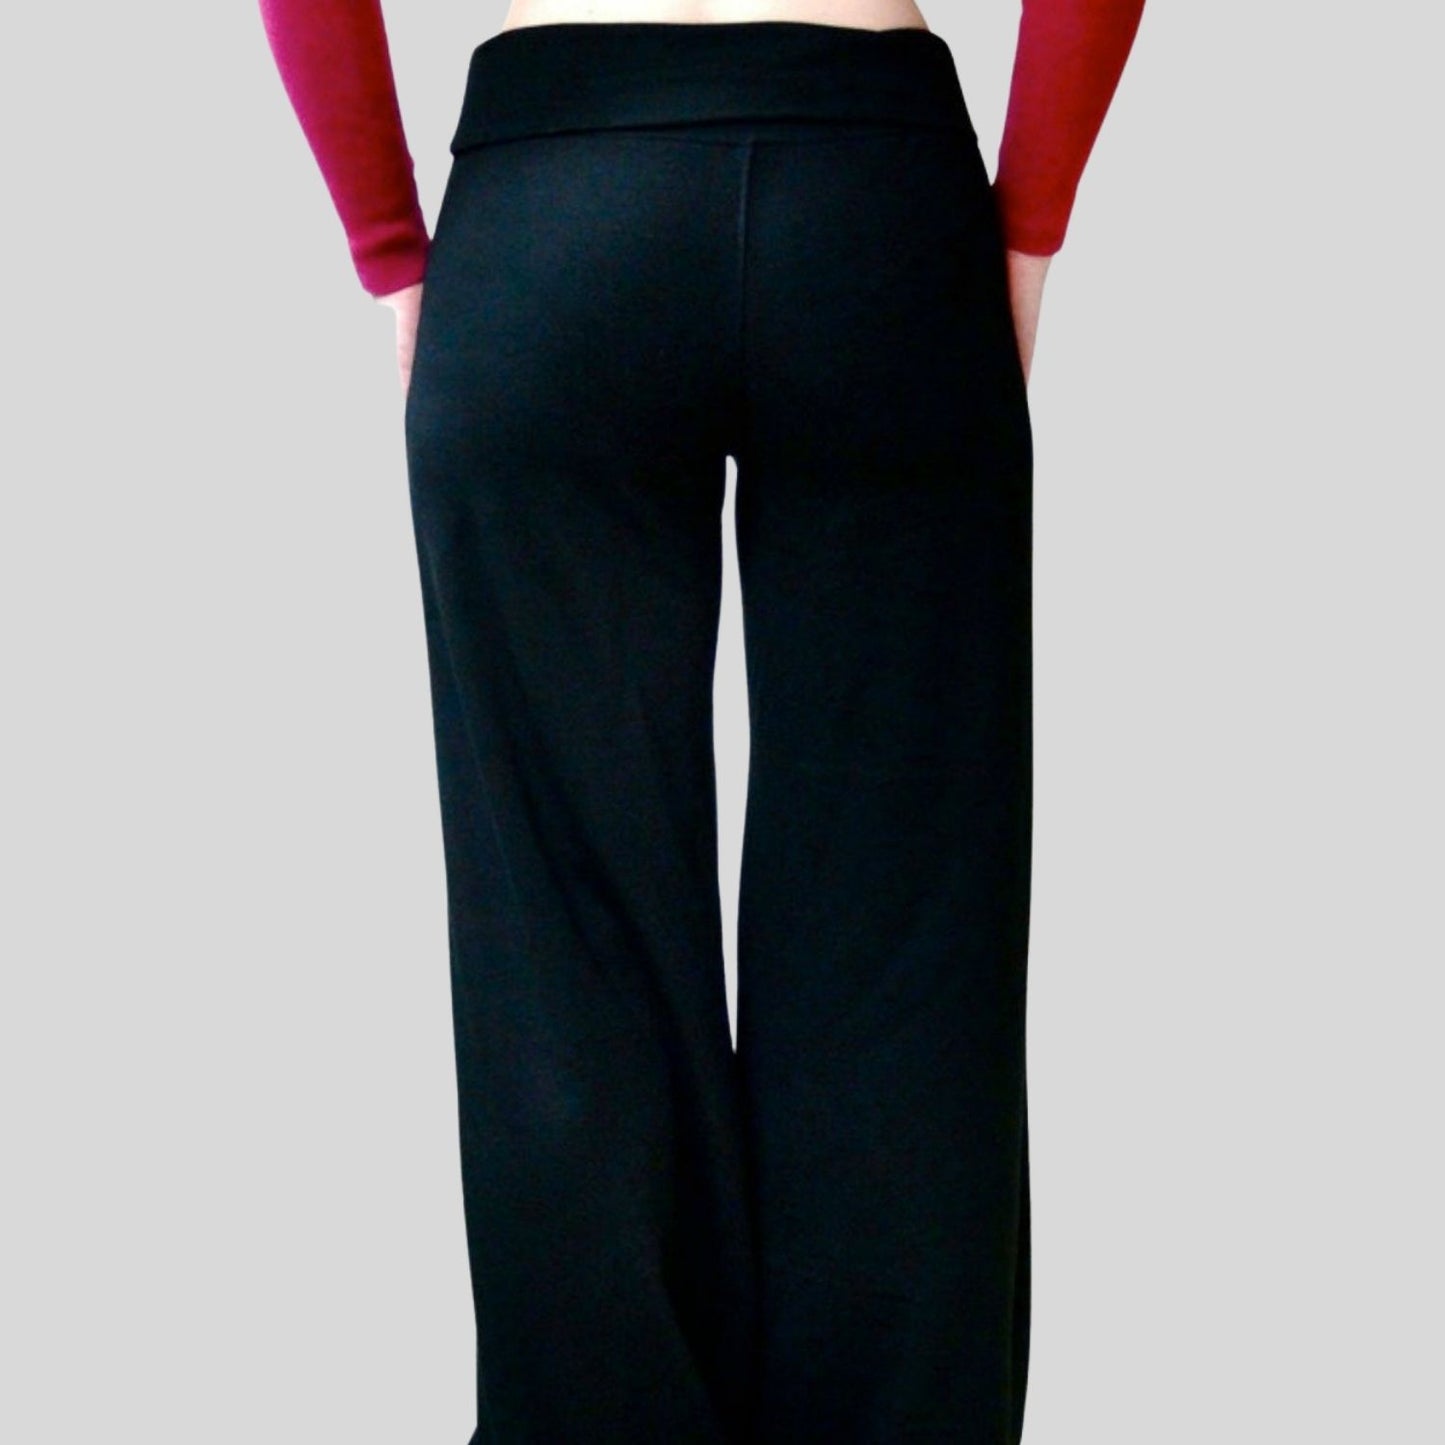 Buy Wide leg black pants | Organic  palazzo pants Canada 